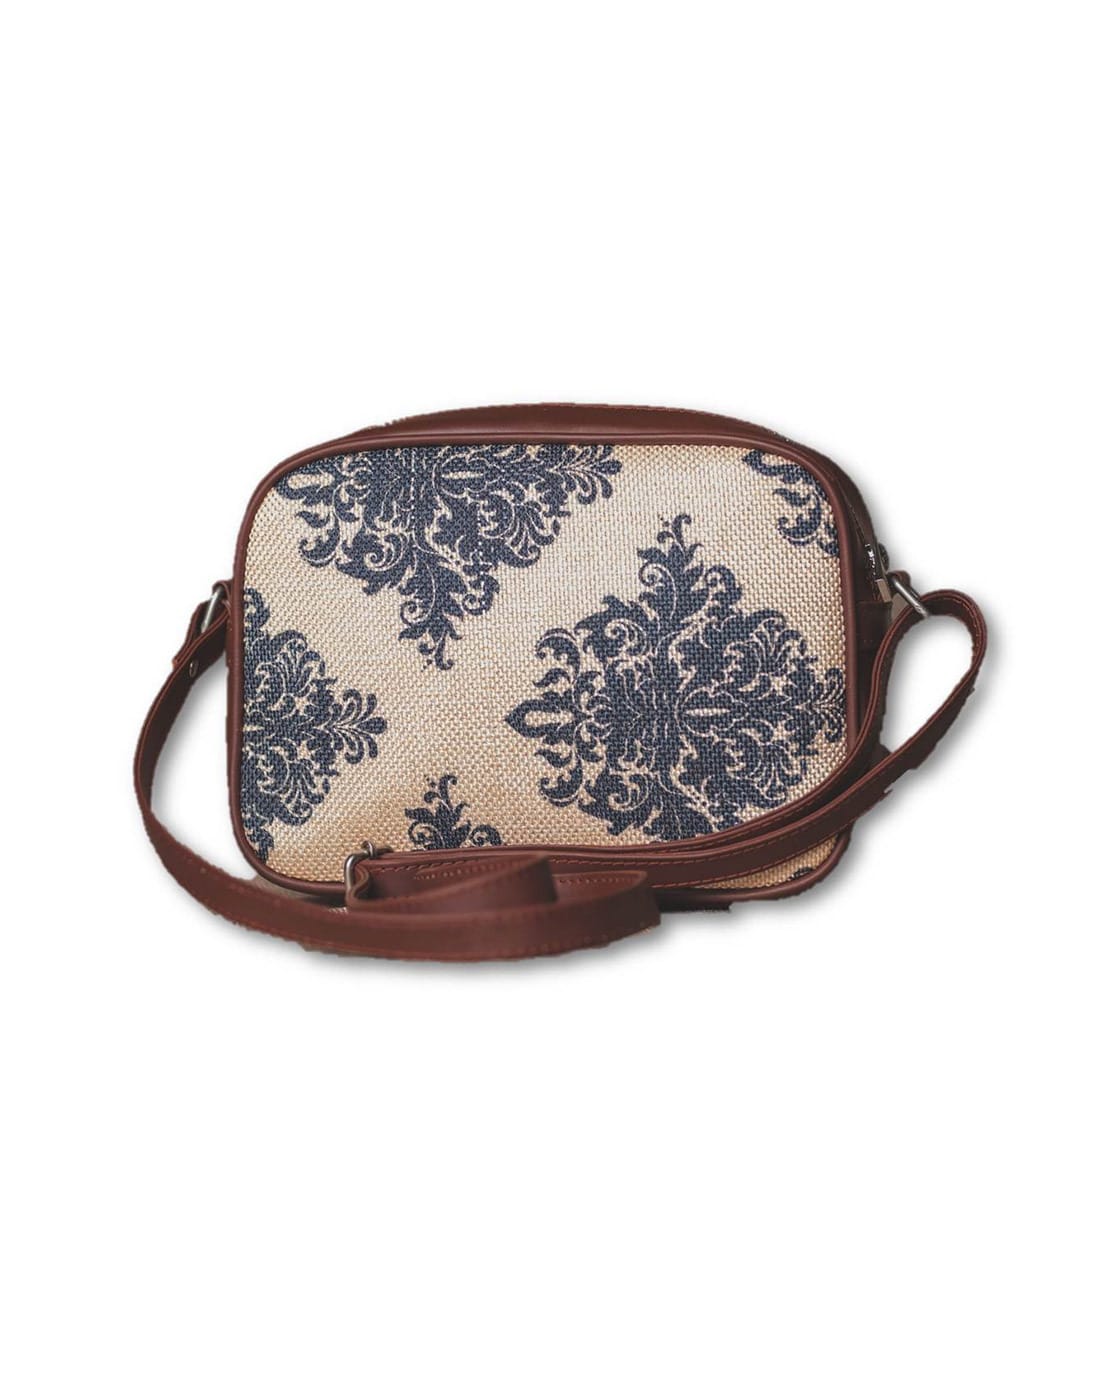 Liz Claiborne Handbag Purse Floral Beaded embroidered Black Snap Closure  used | eBay